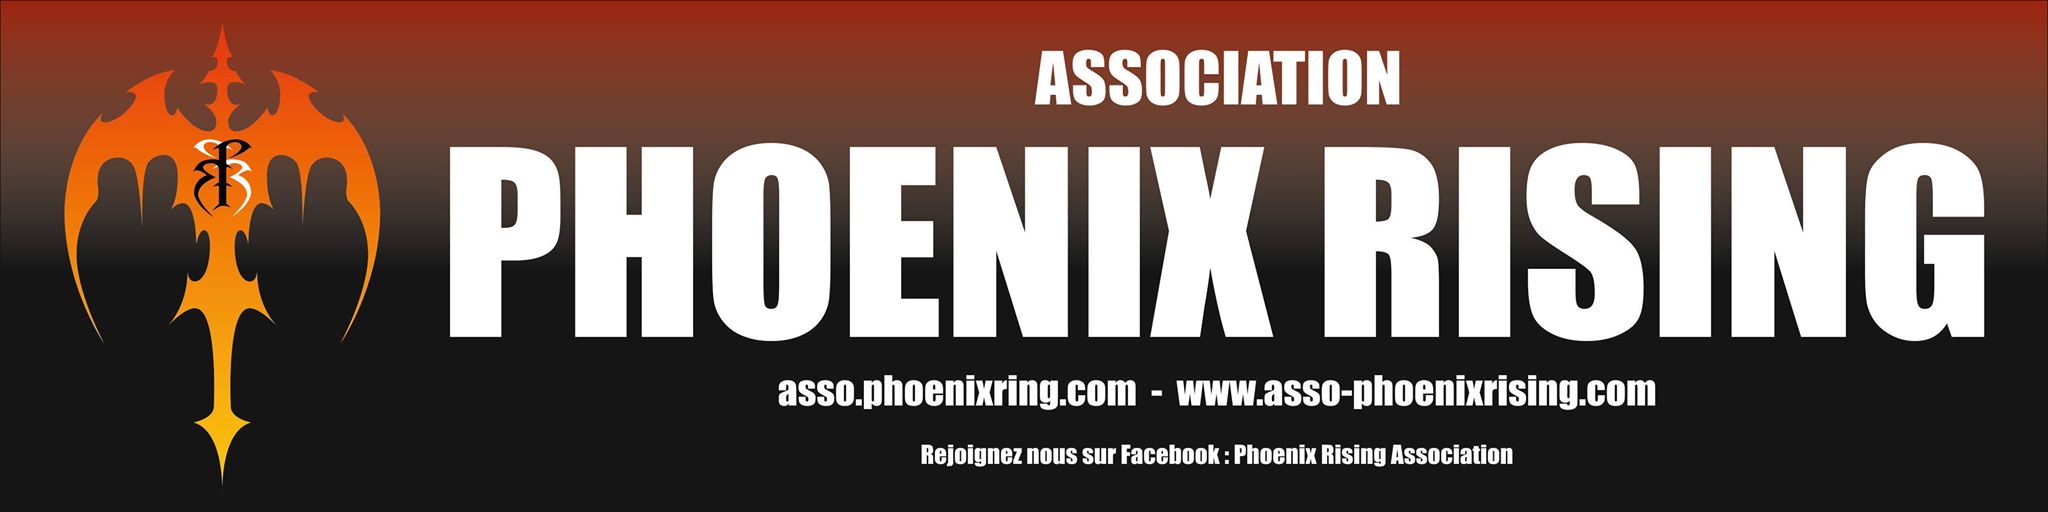 Association Phoenix Rising